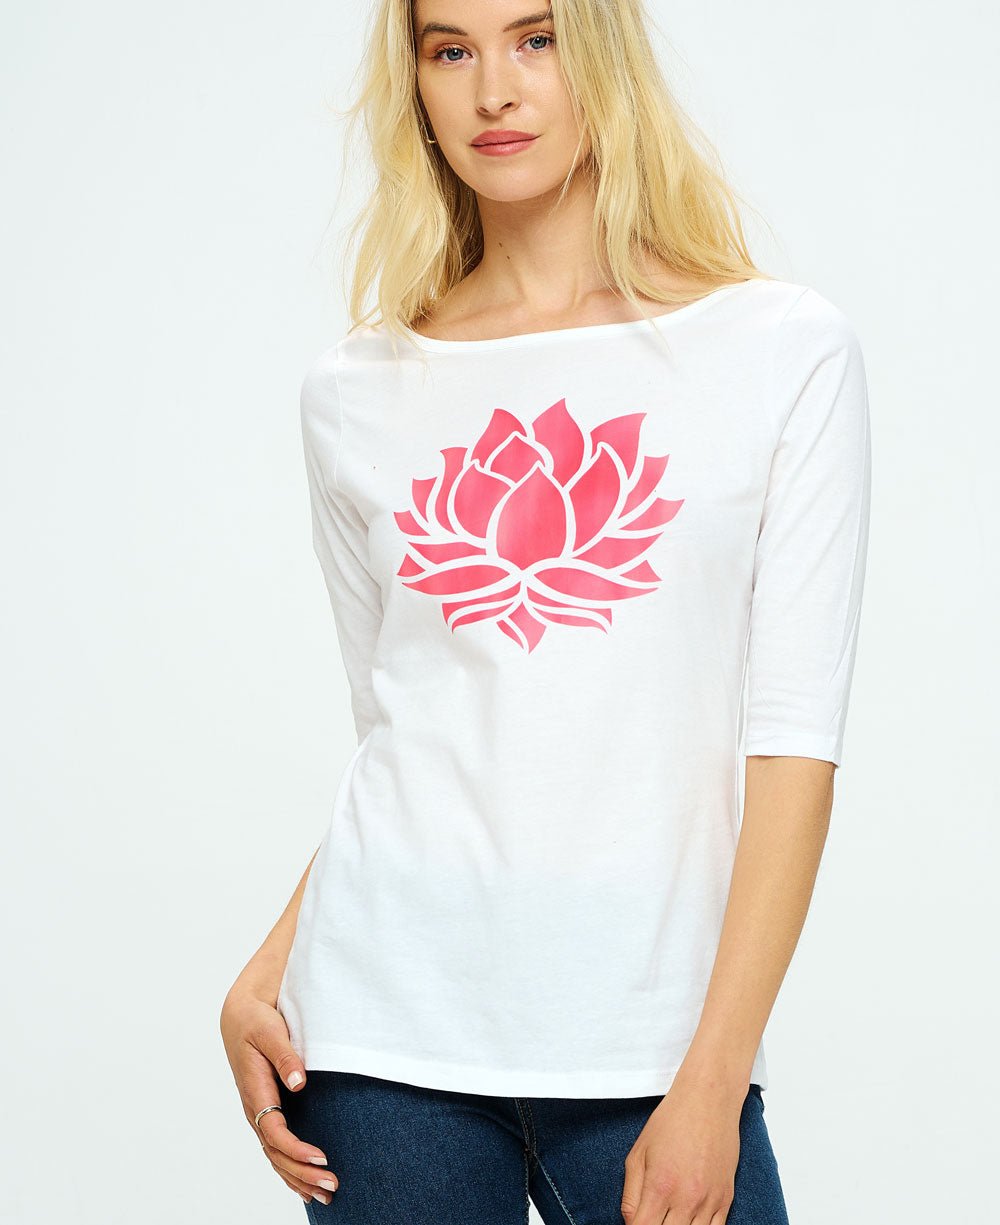 Bold Lotus Print Elbow Length Sleeve Cotton Tee - Shirts & Tops S